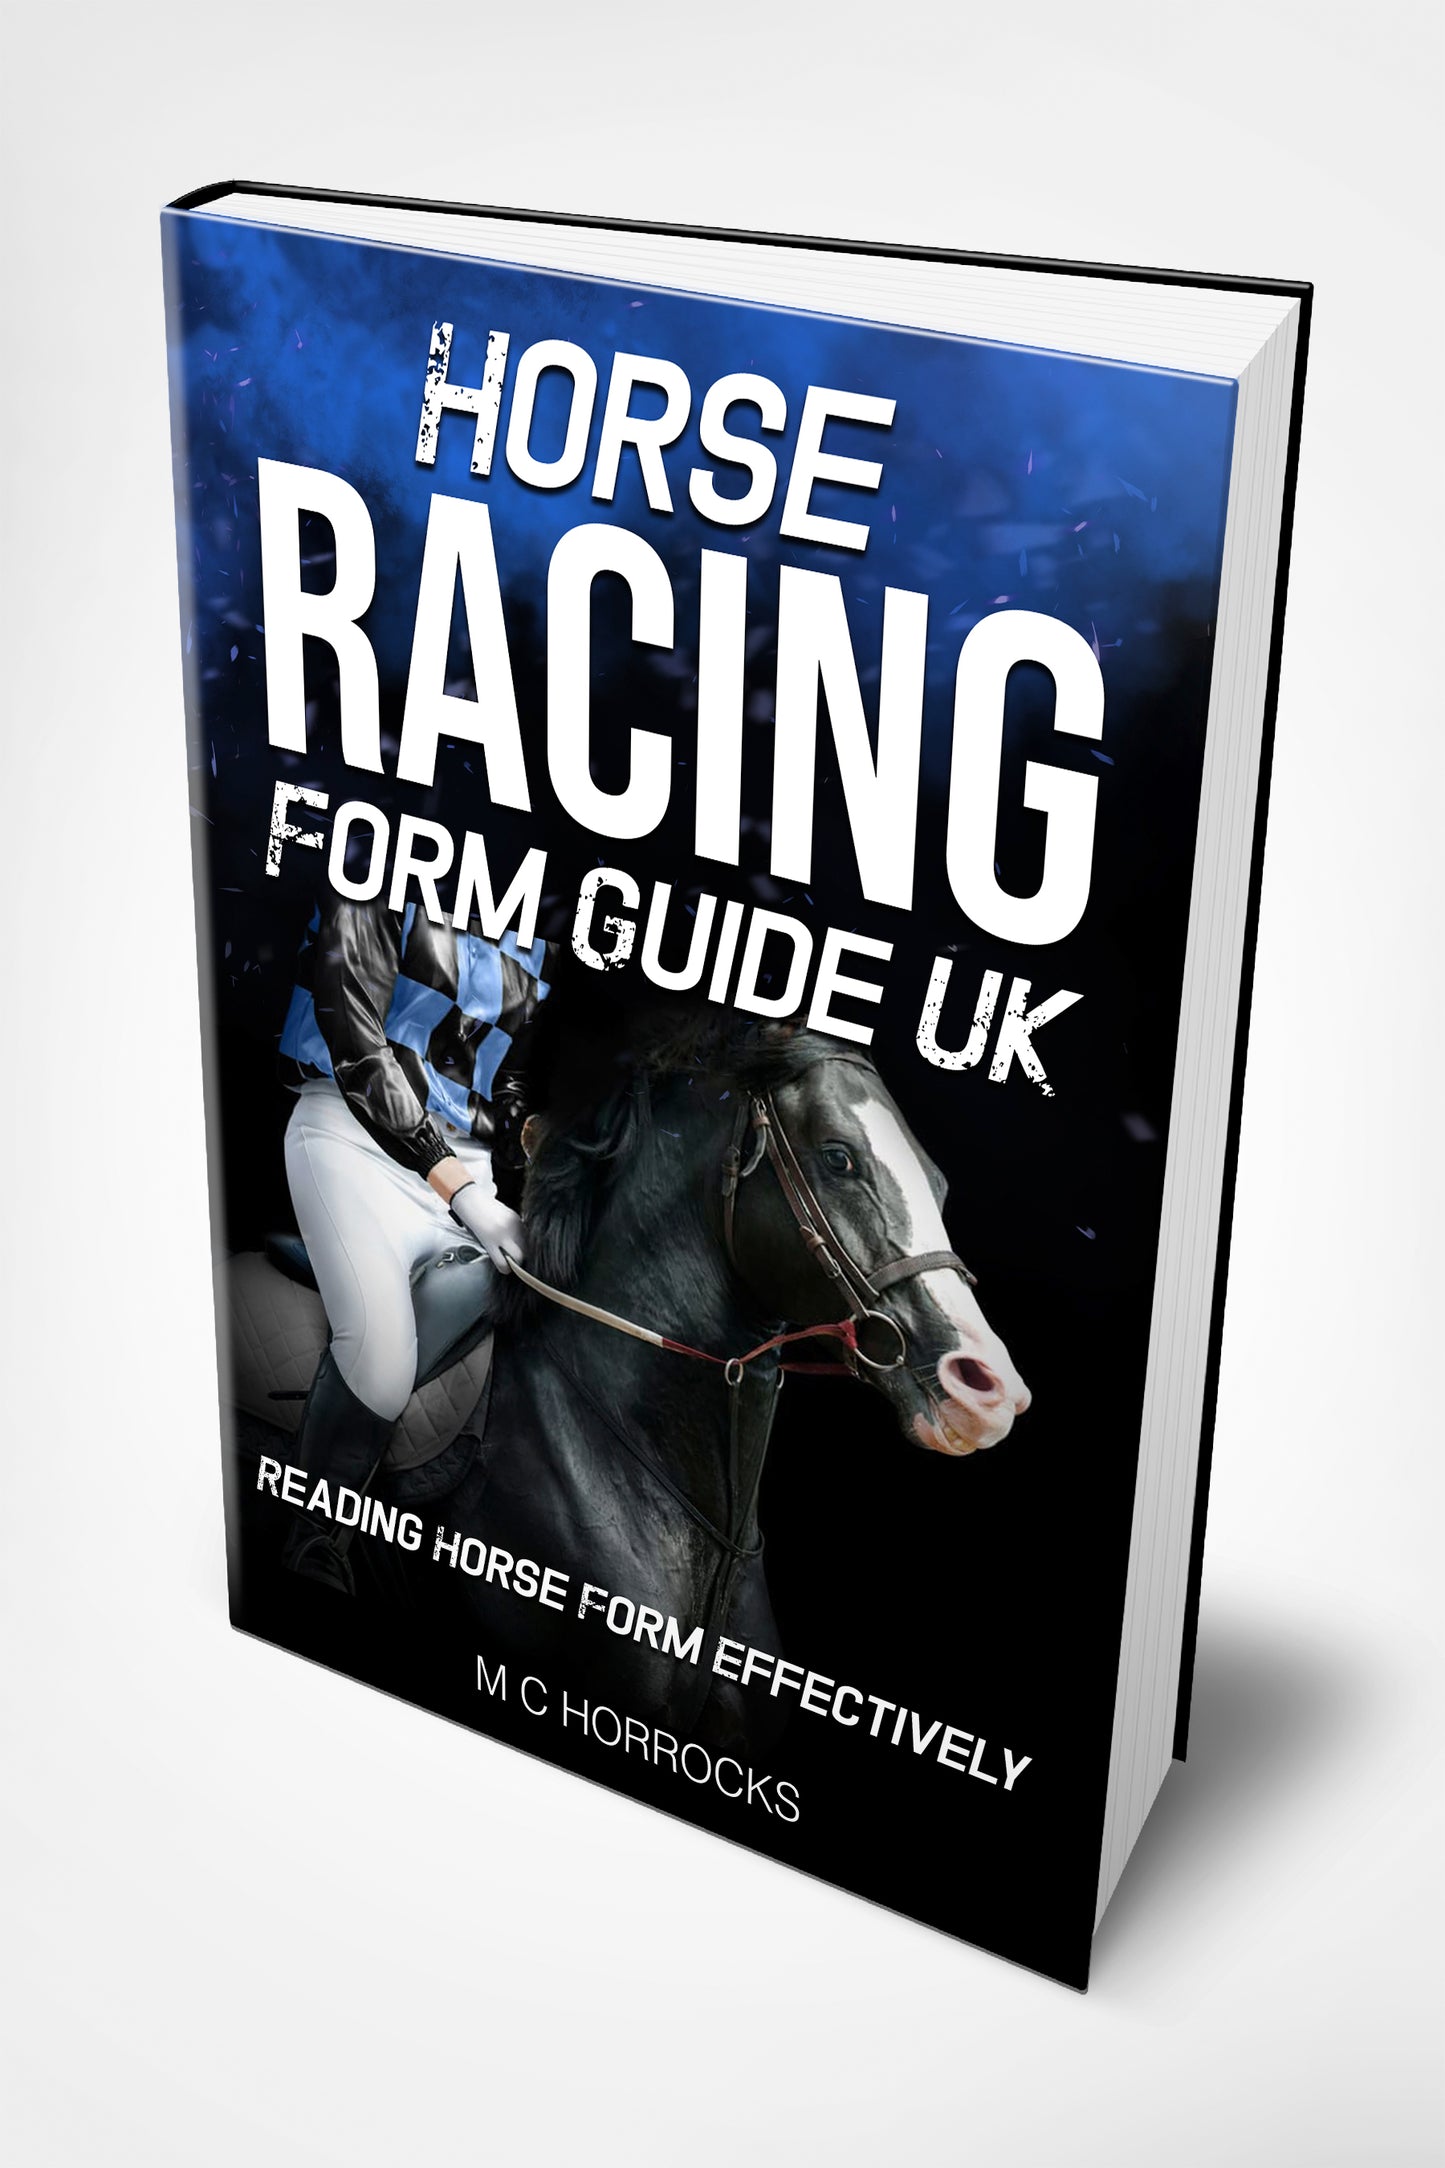 4 UK Horse Racing Systems Bundle Paperback Books